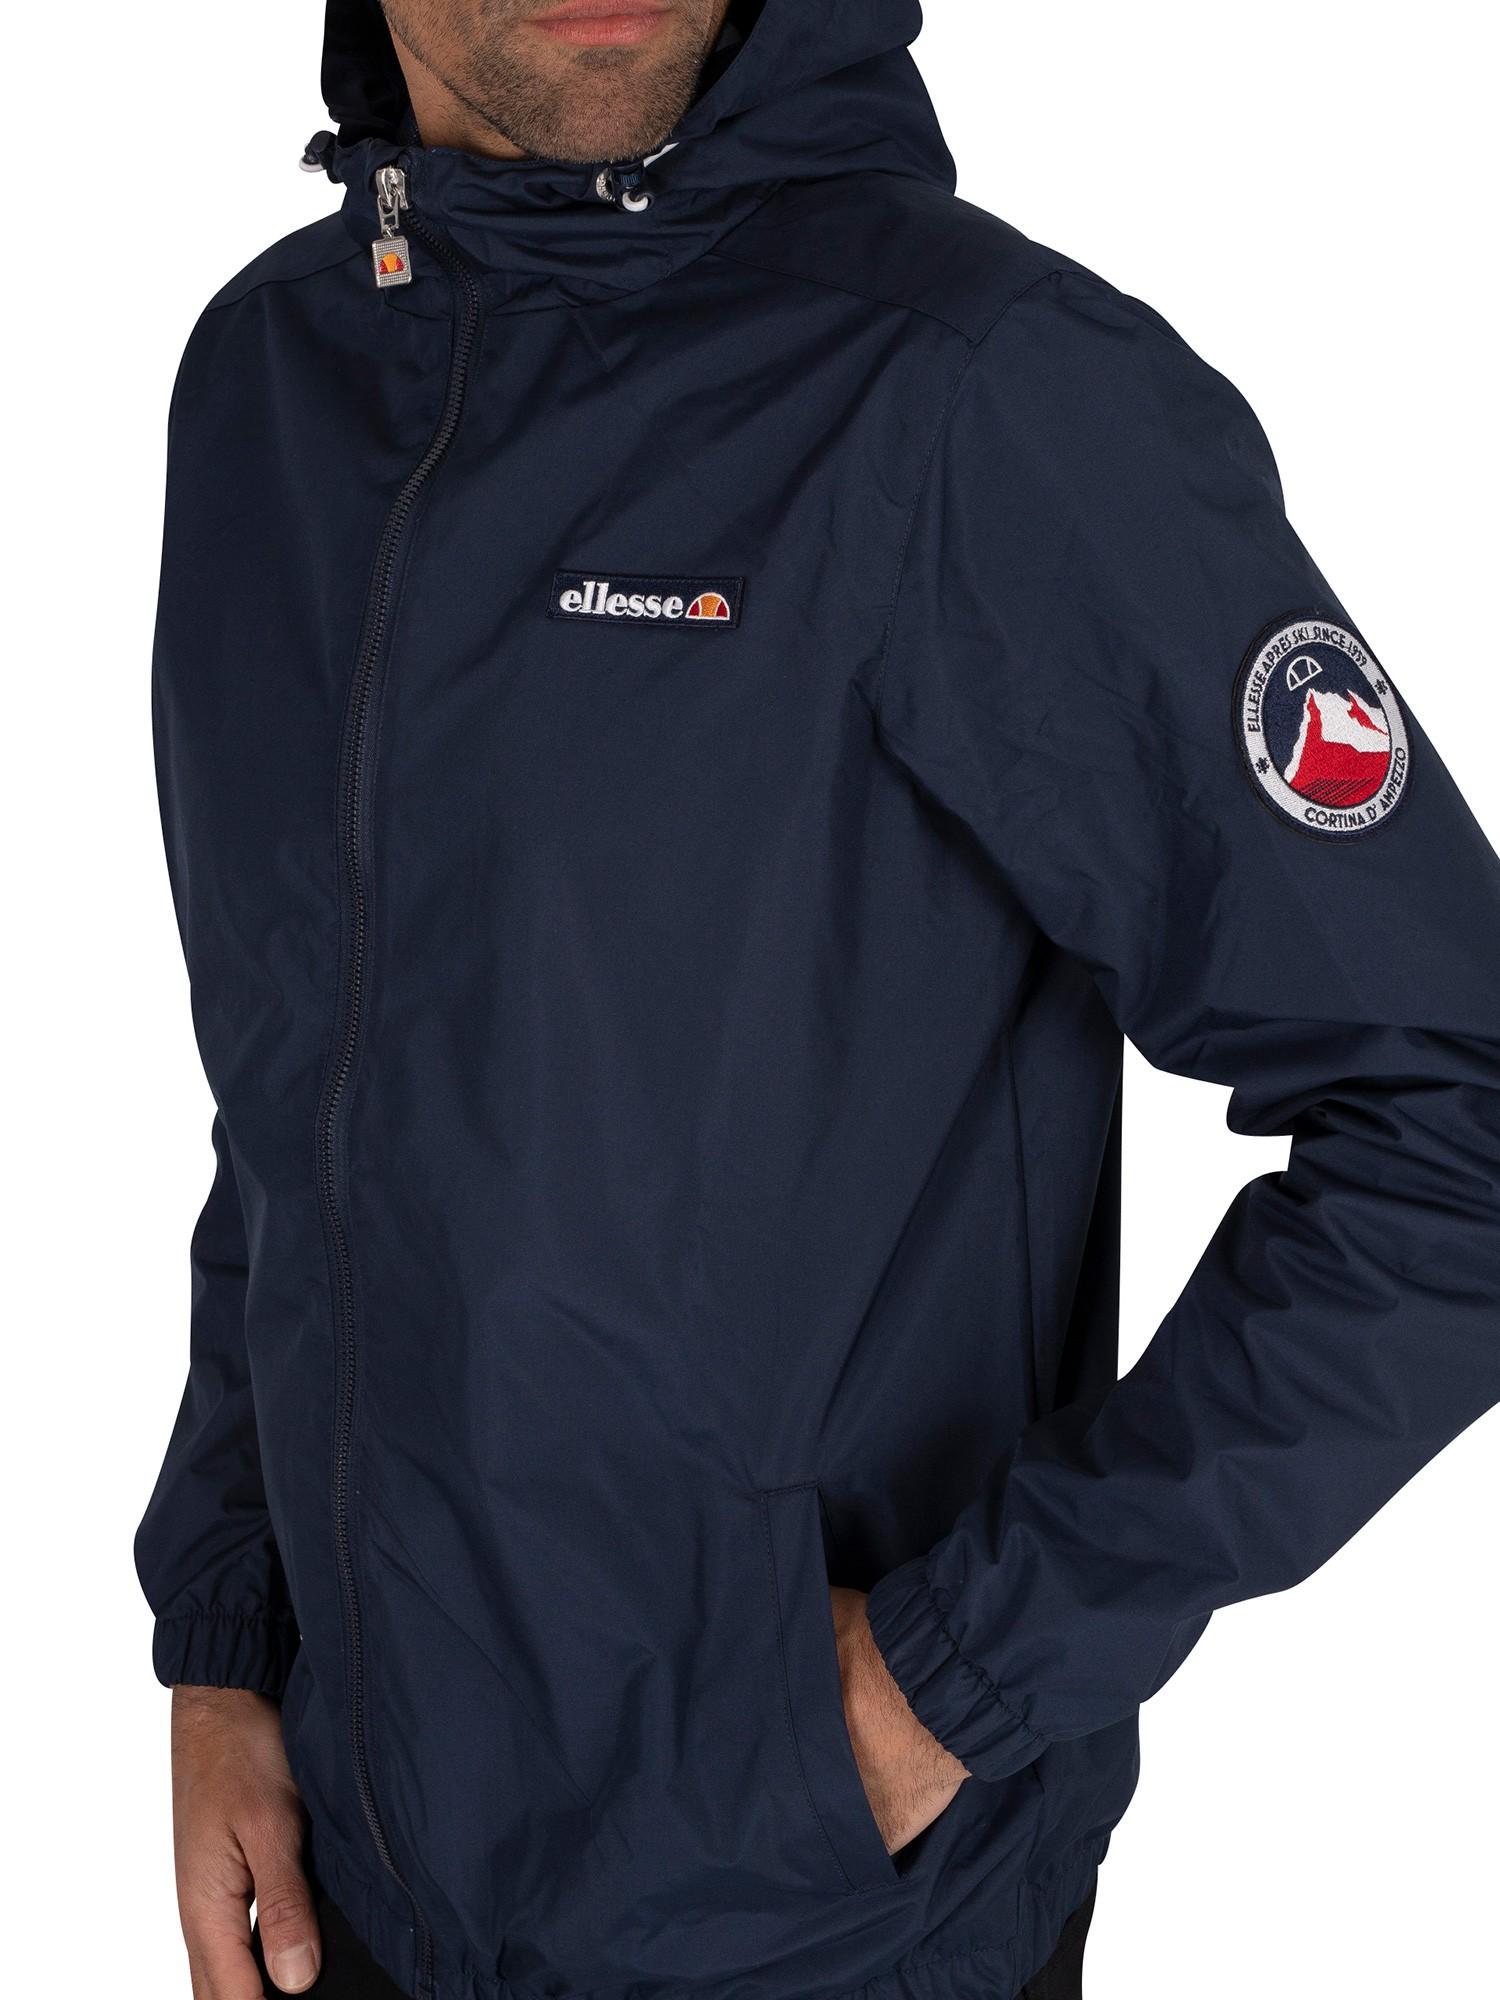 Details about   Ellessse Mens Hooded Jacket Lightweight Shell Navy Blue Terrazzo Medium 